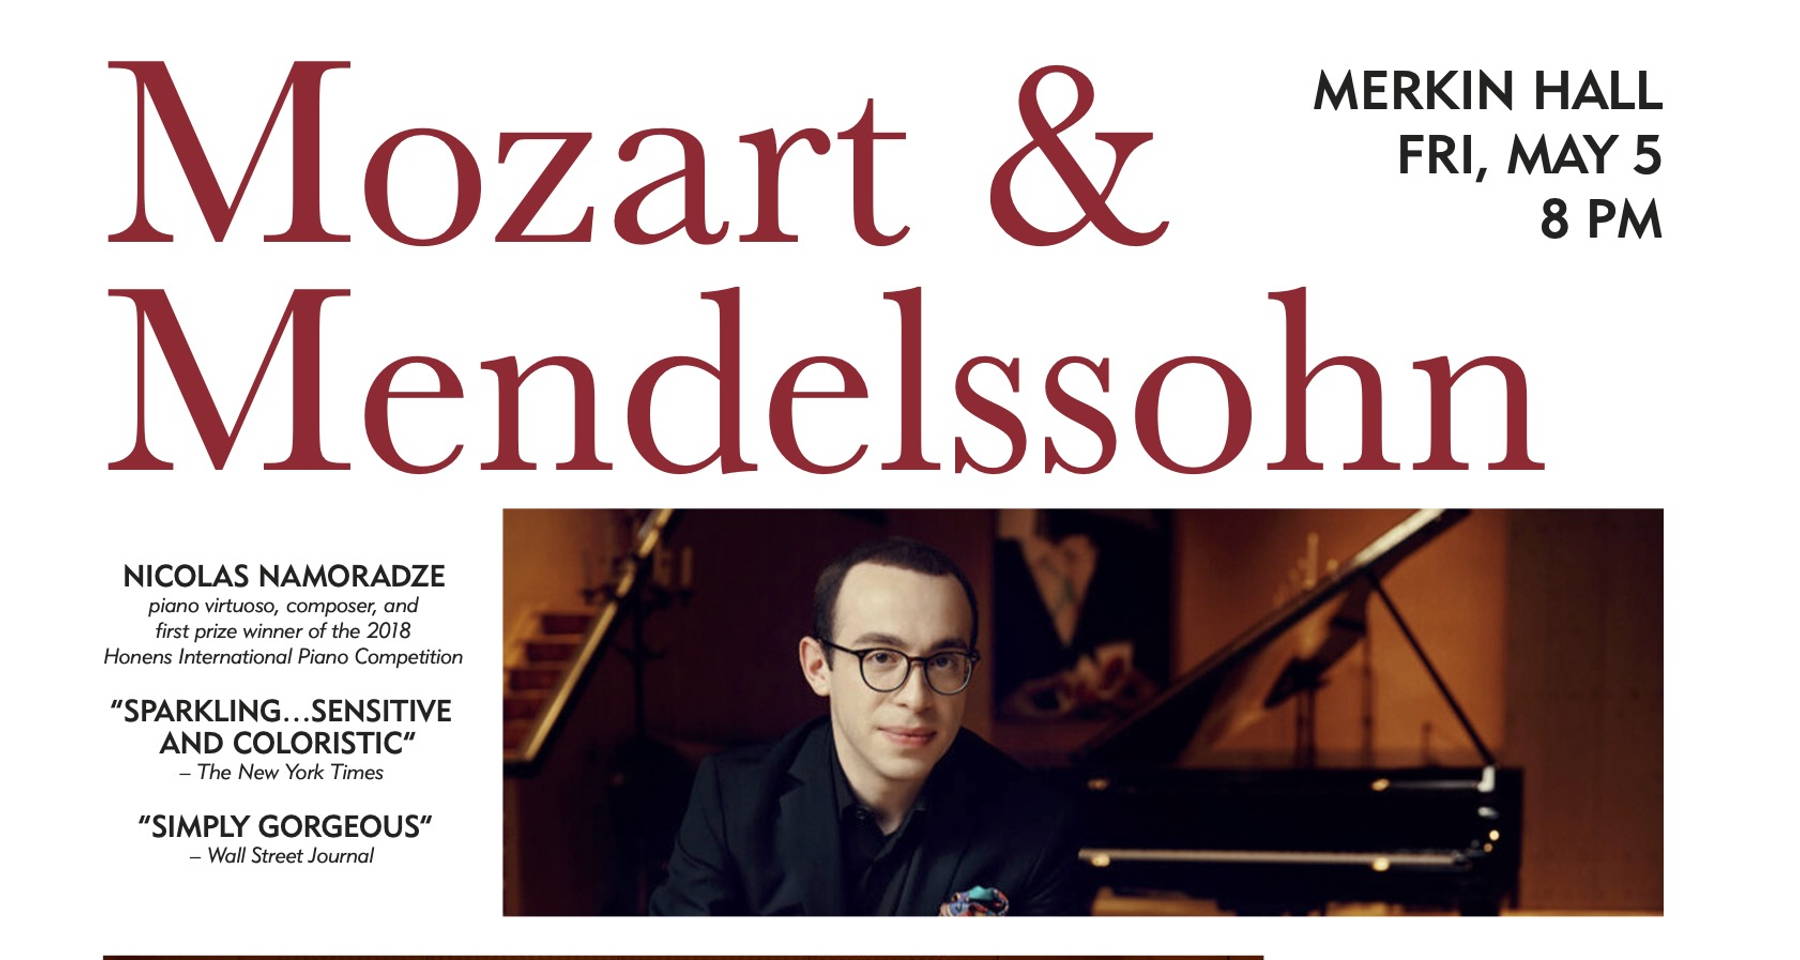 Pegasus Presents: Mozart, Mendelssohn, Scriabin, & Rachmaninoff at Merkin Hall!